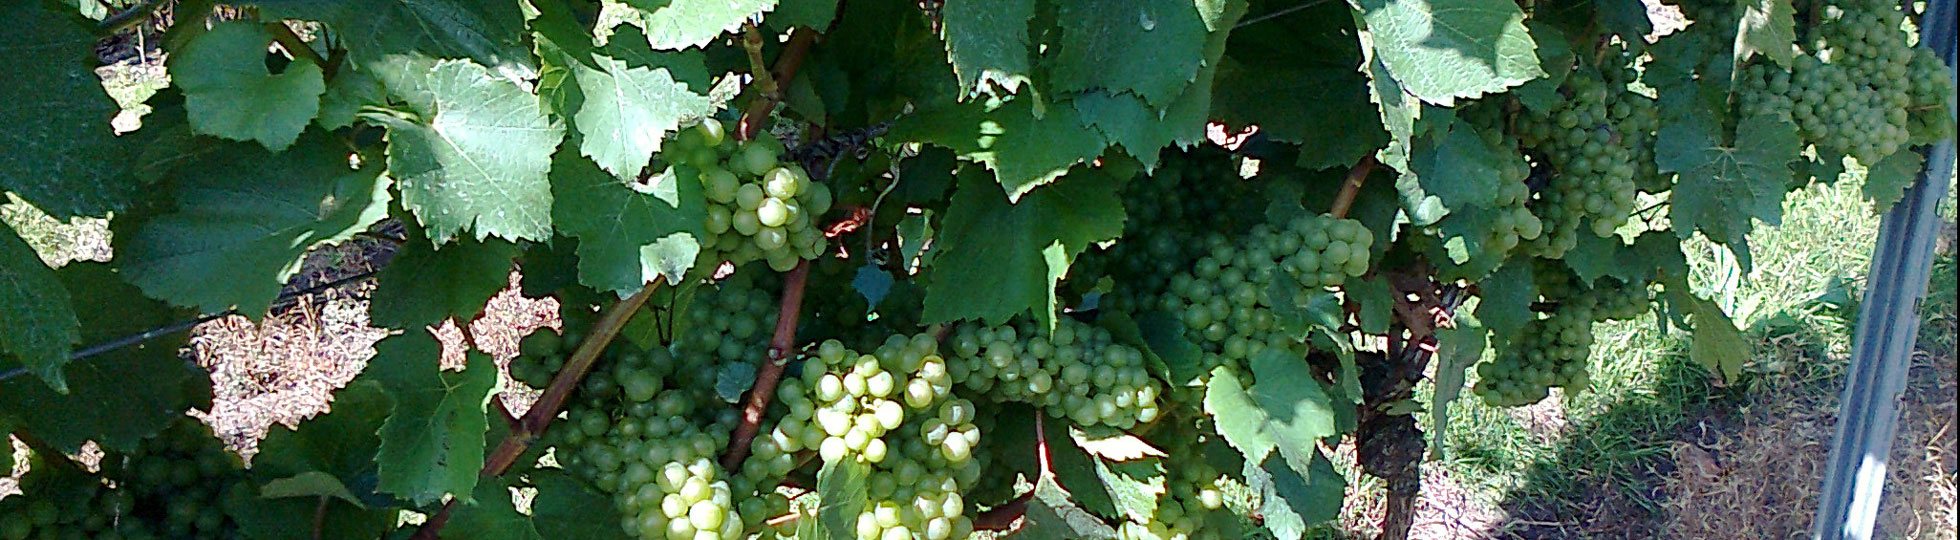 Chardonnay grapes ripening at Martin’s Lane, Essex.